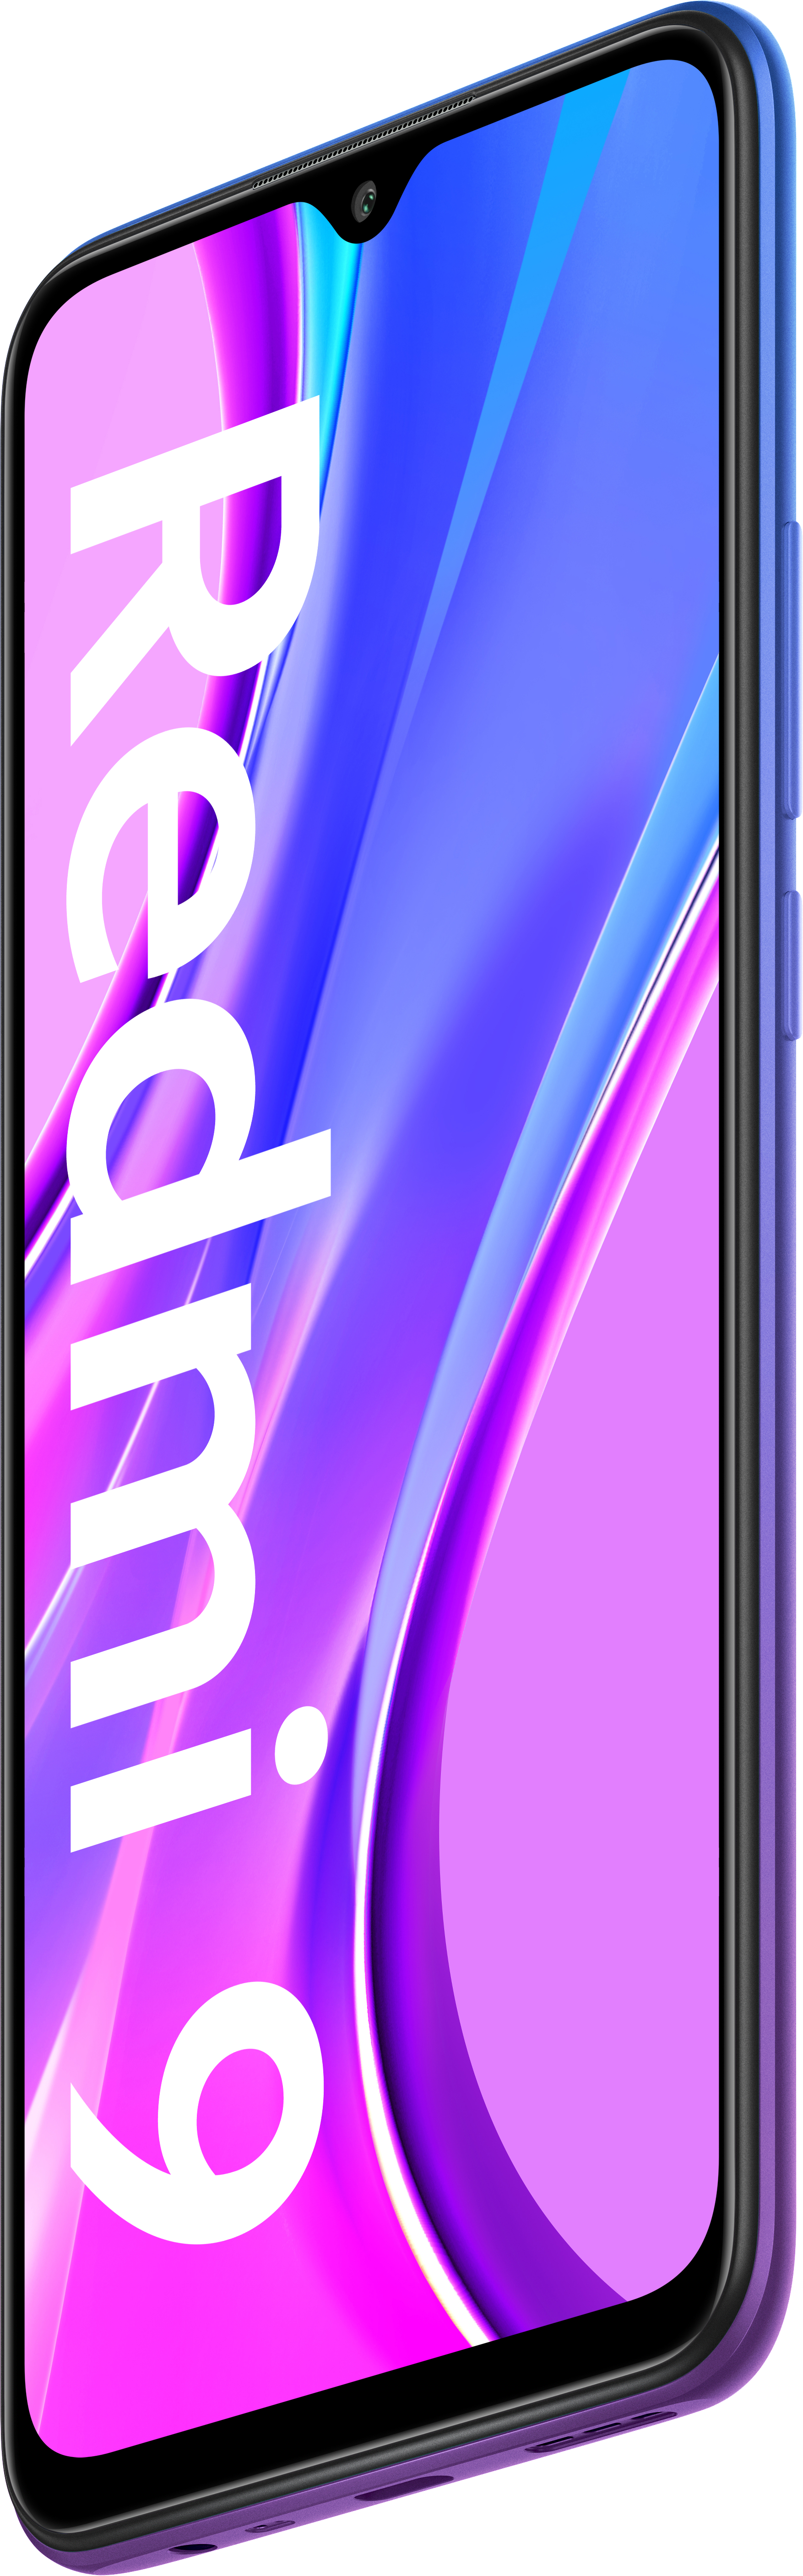 XIAOMI REDMI 9 Purple SIM 64 Dual Sunset GB